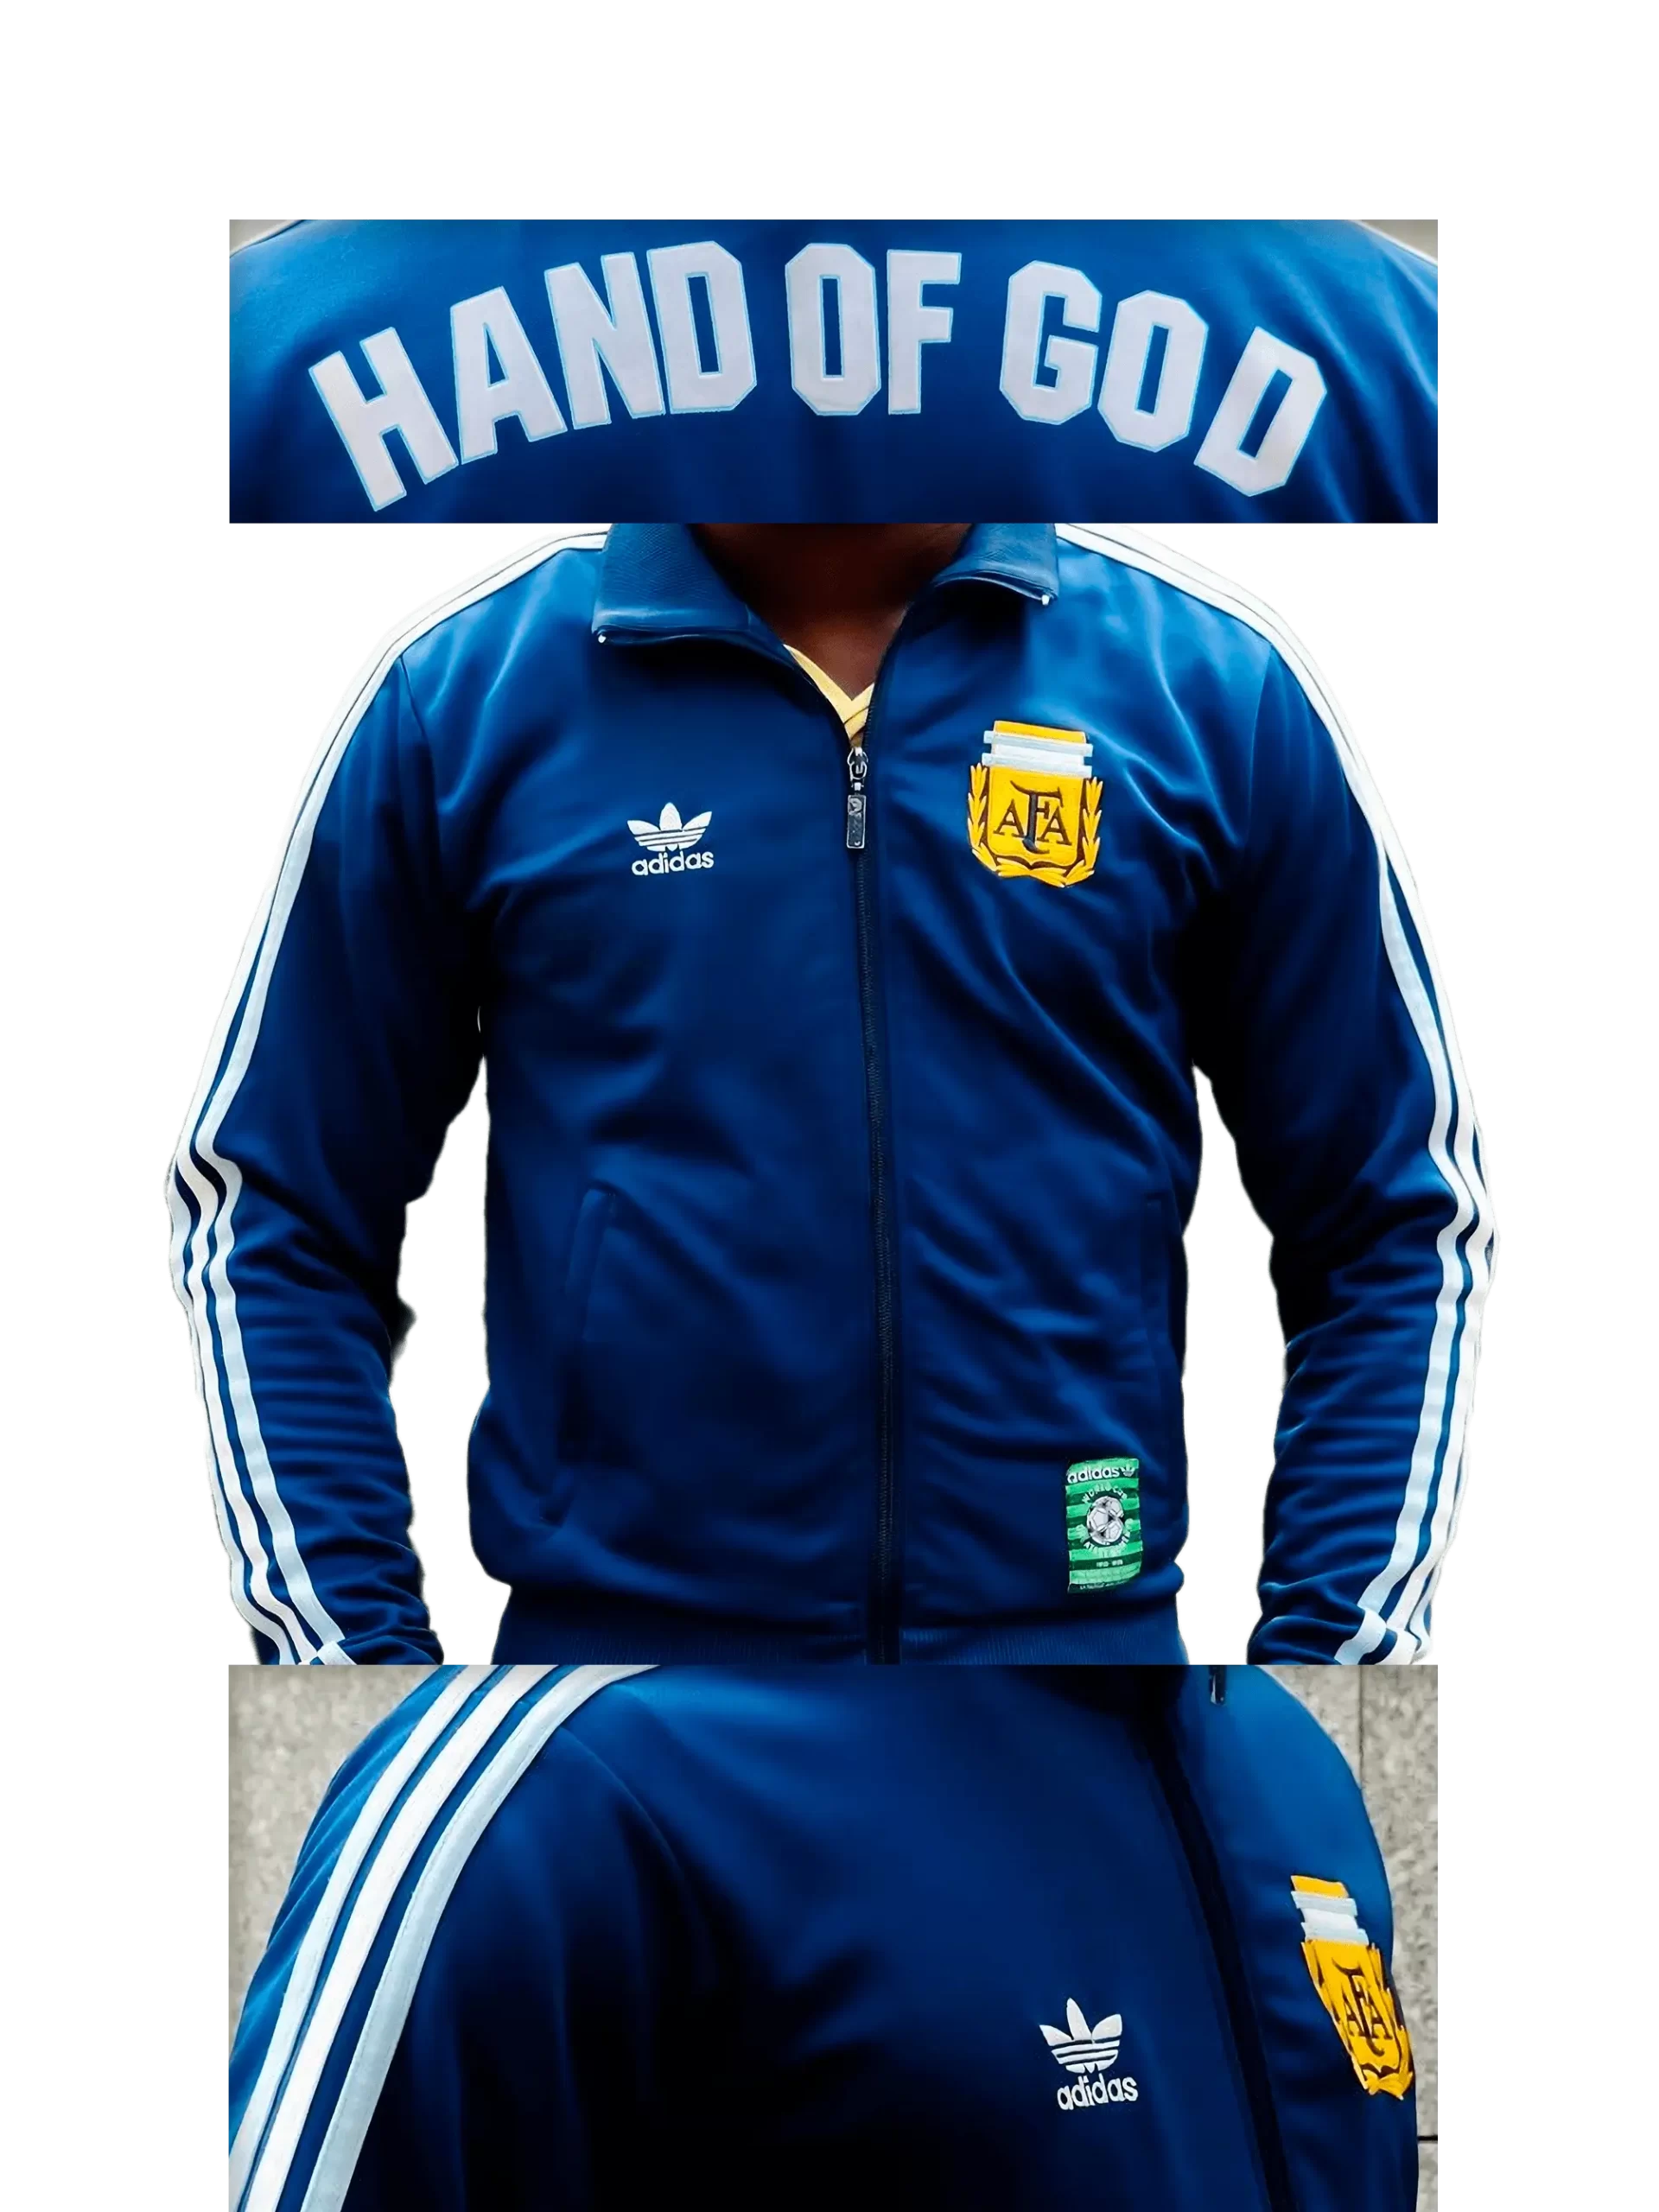 Men's 2006 Argentina '86 Hand of God TT by Adidas: Soaring (EnLawded.com file #lmchk67260ip2y123826kg9st)